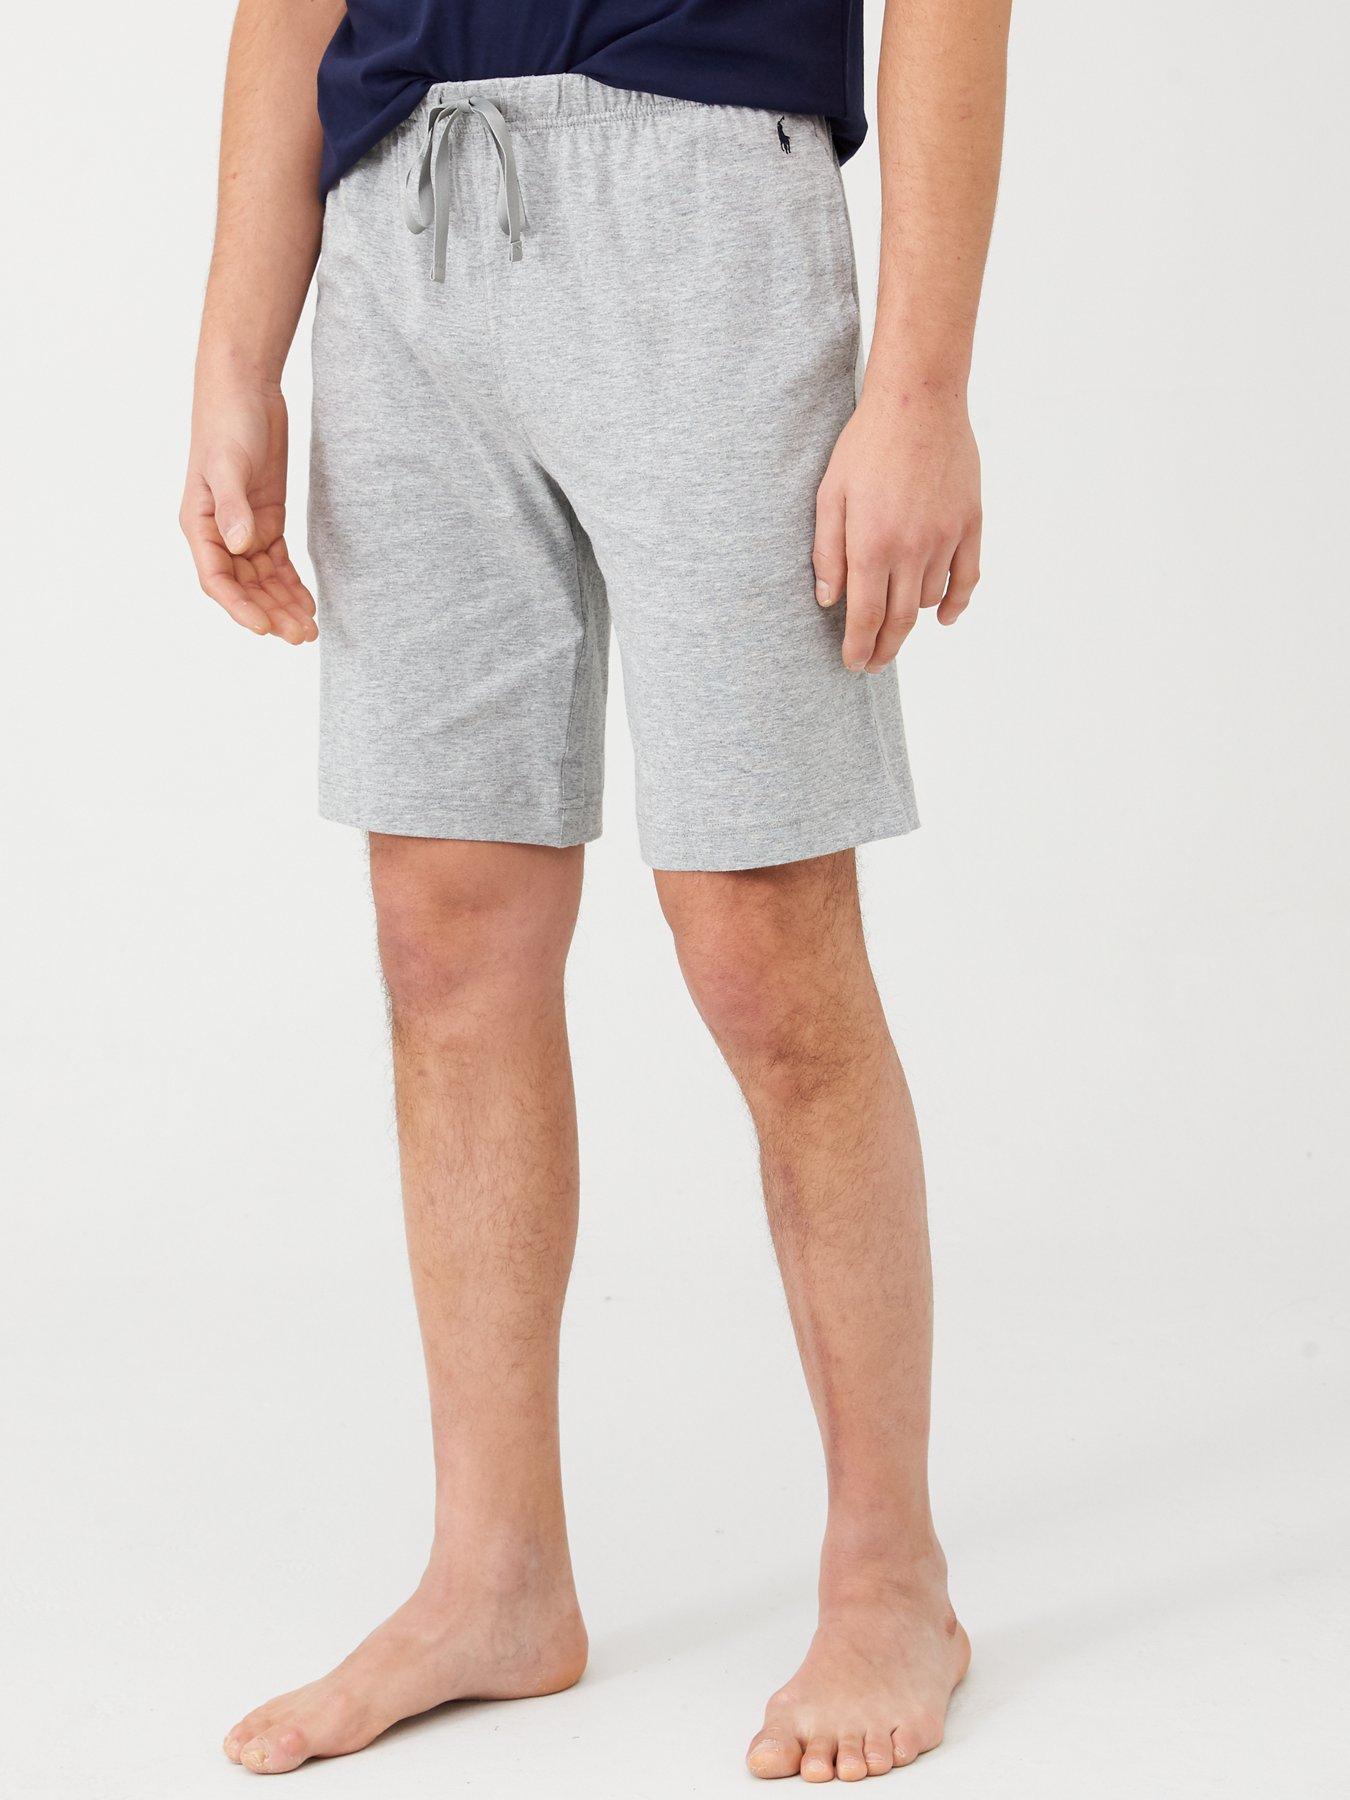 ralph lauren shorts grey